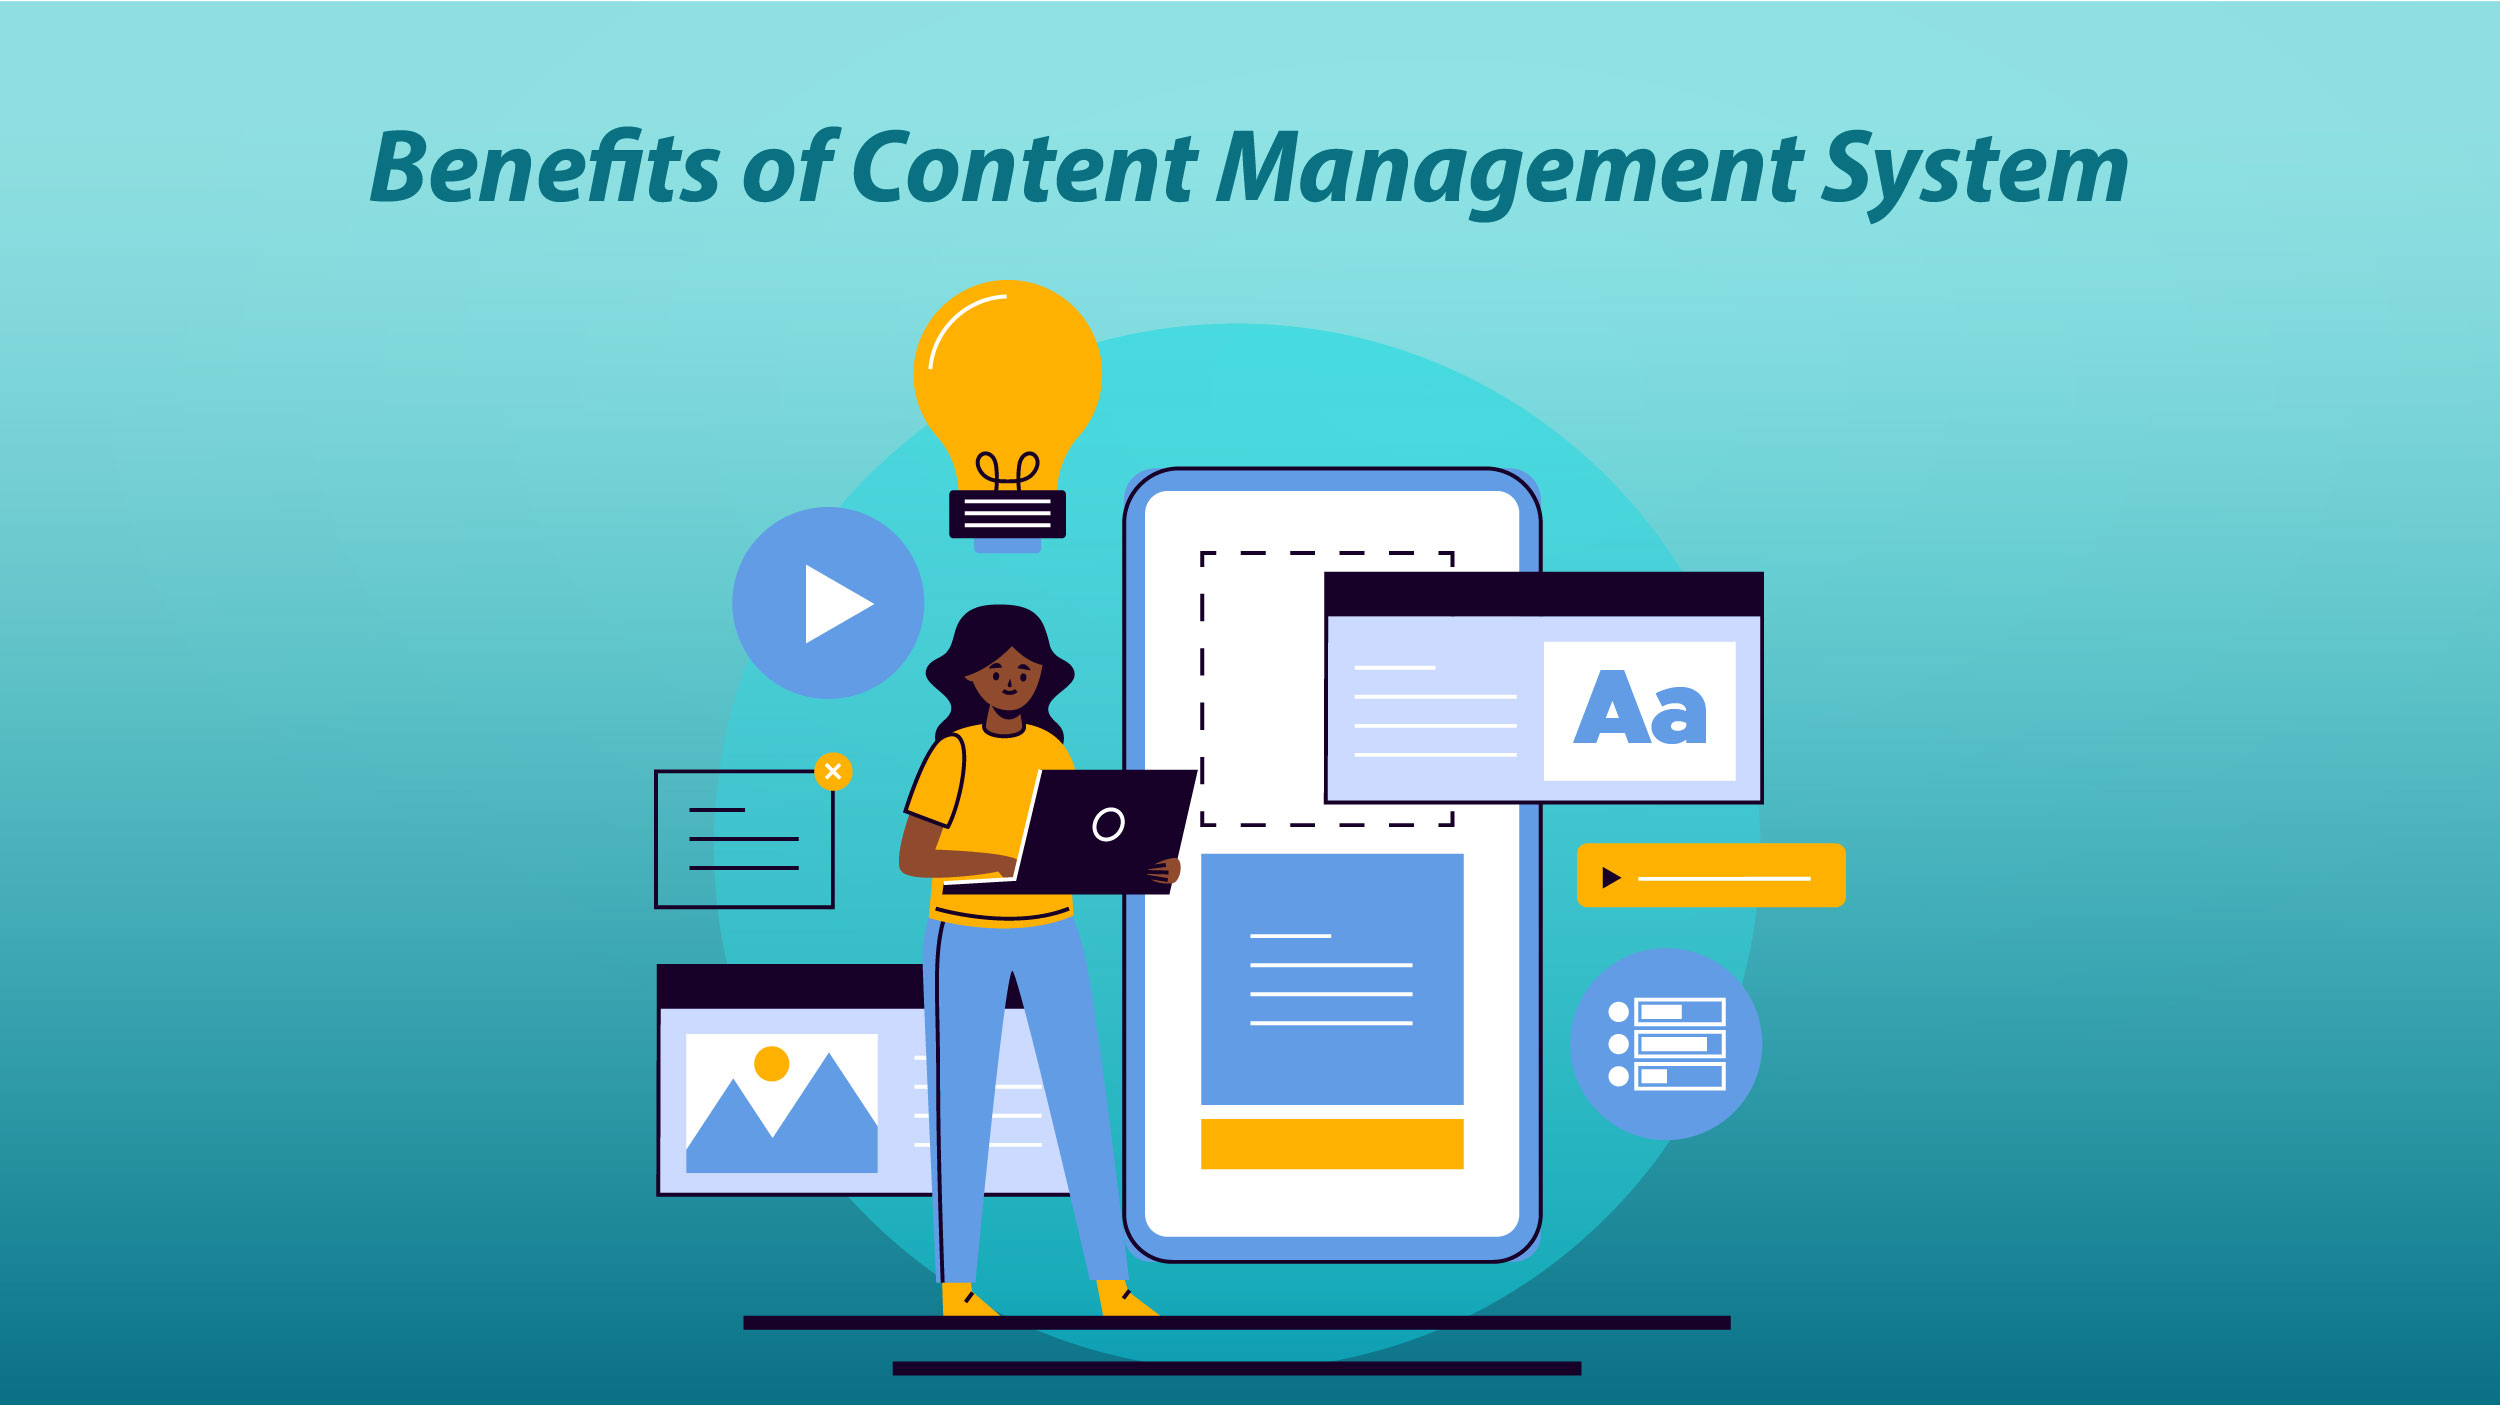 Content Management system